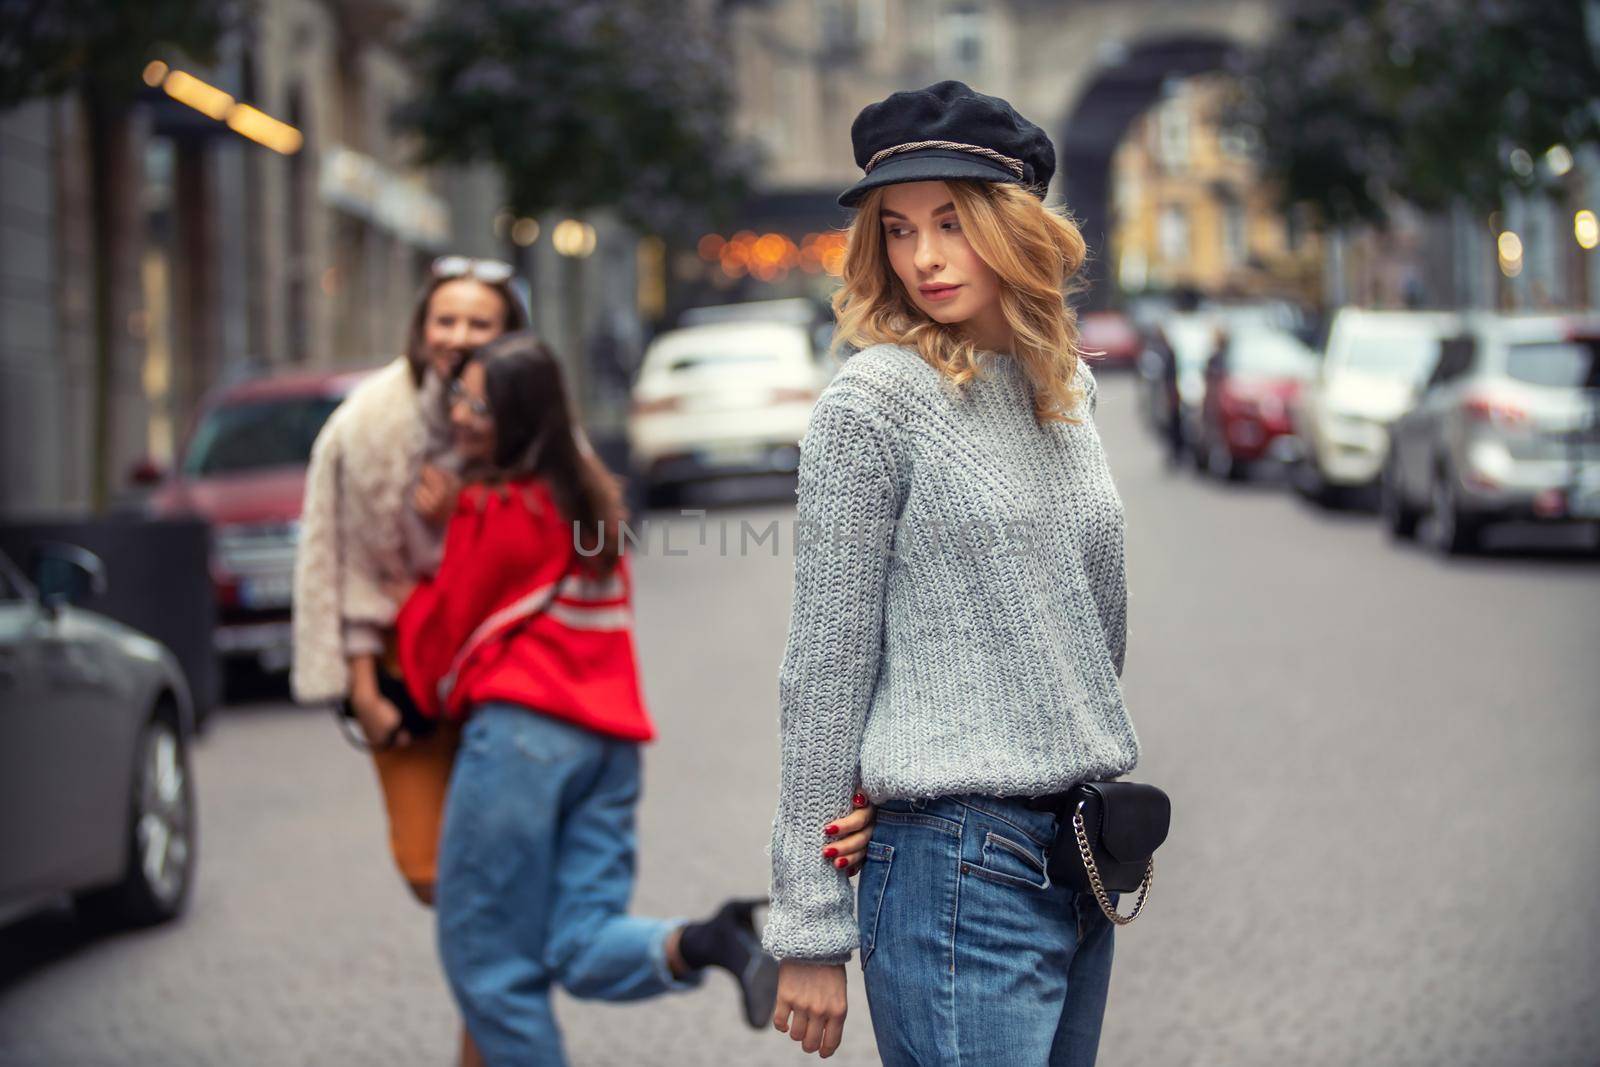 Girls walking down the street by zokov